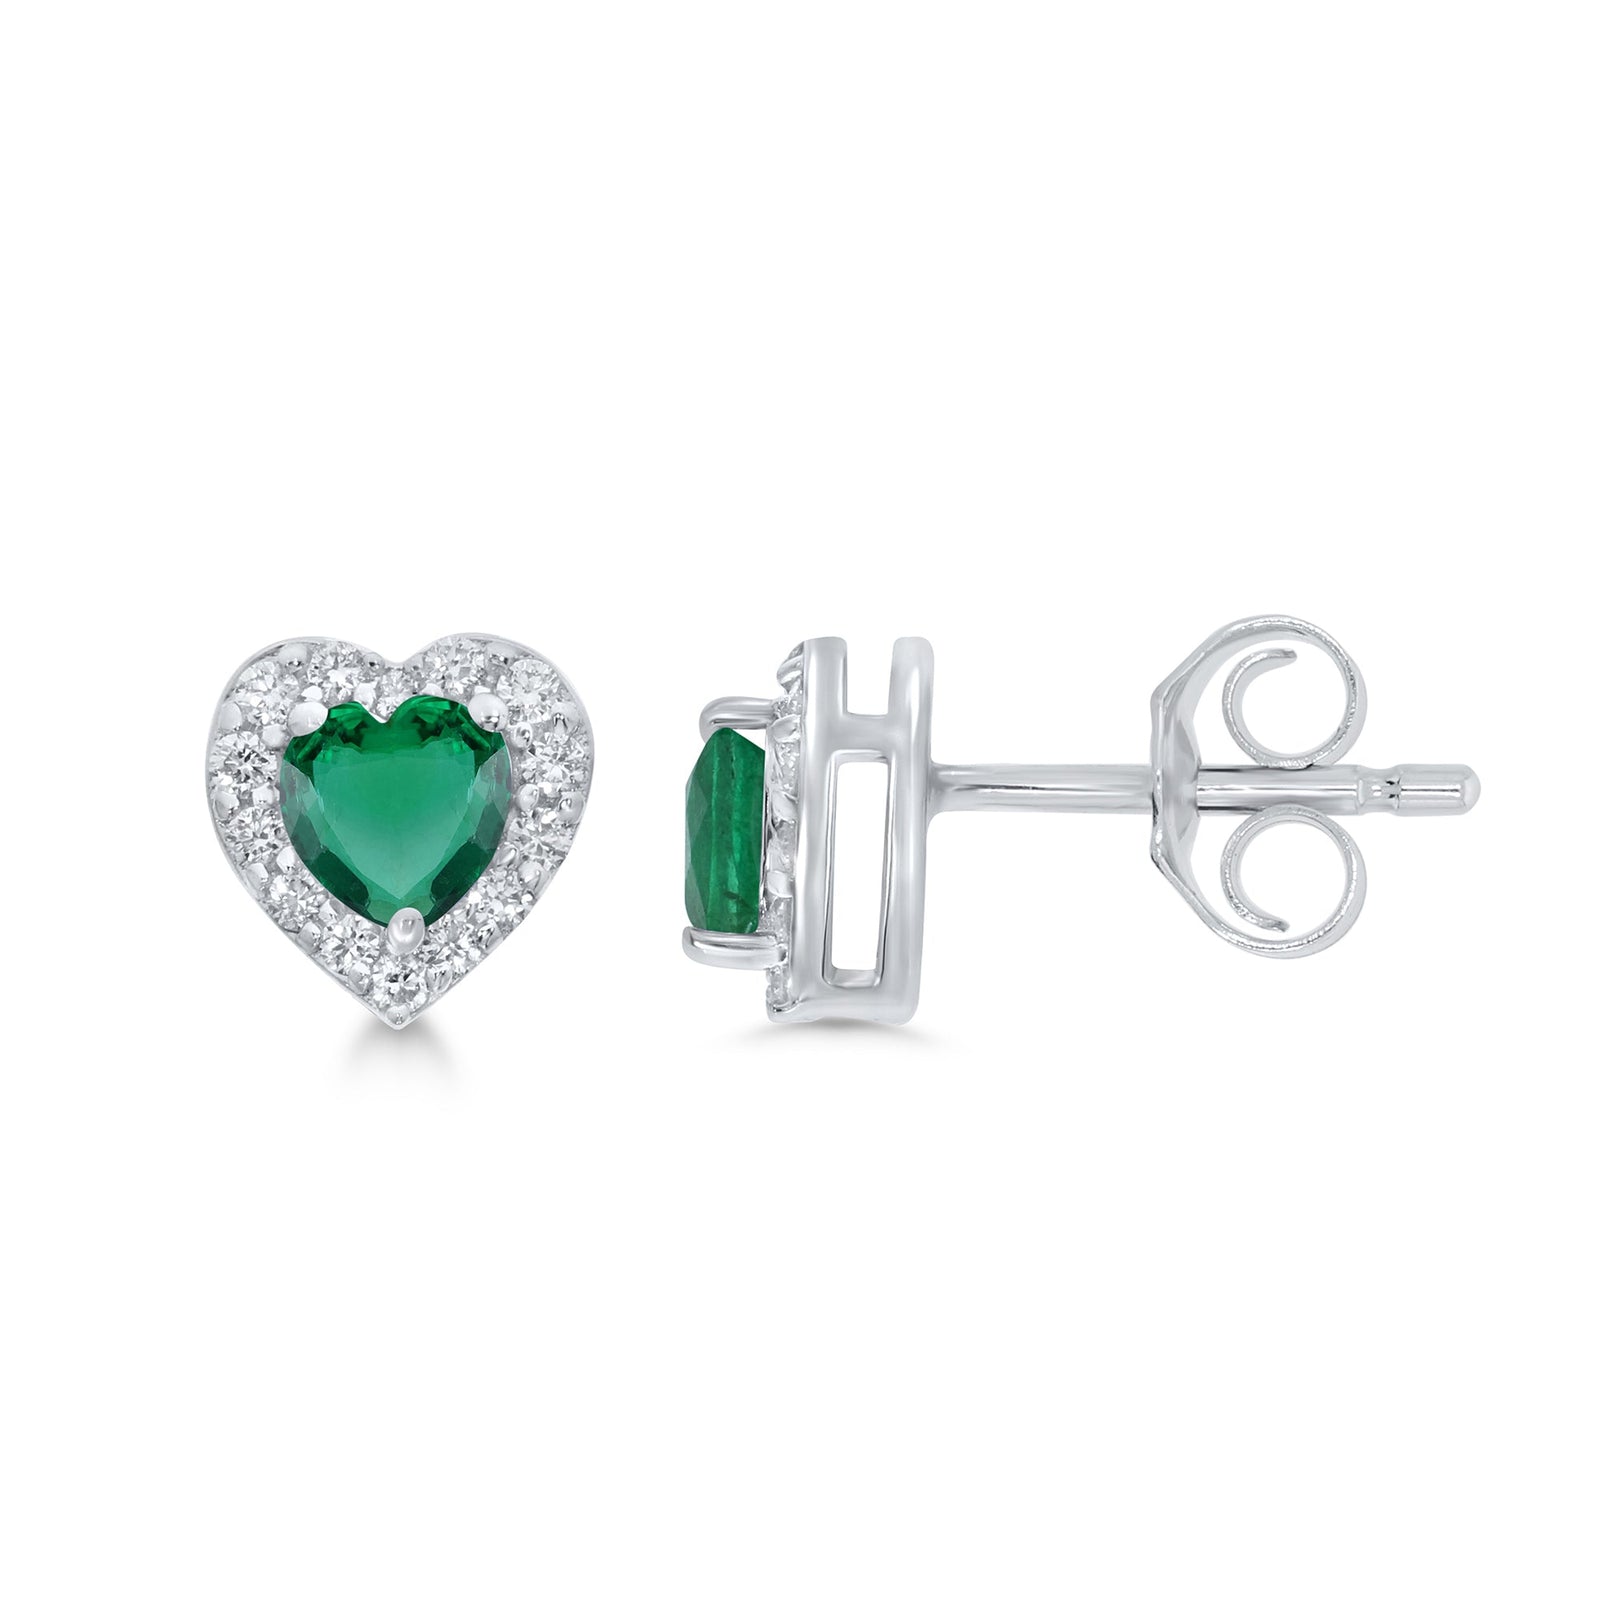 9ct gold 5mm heart shape emerald & diamond cluster stud earrings 0.16ct